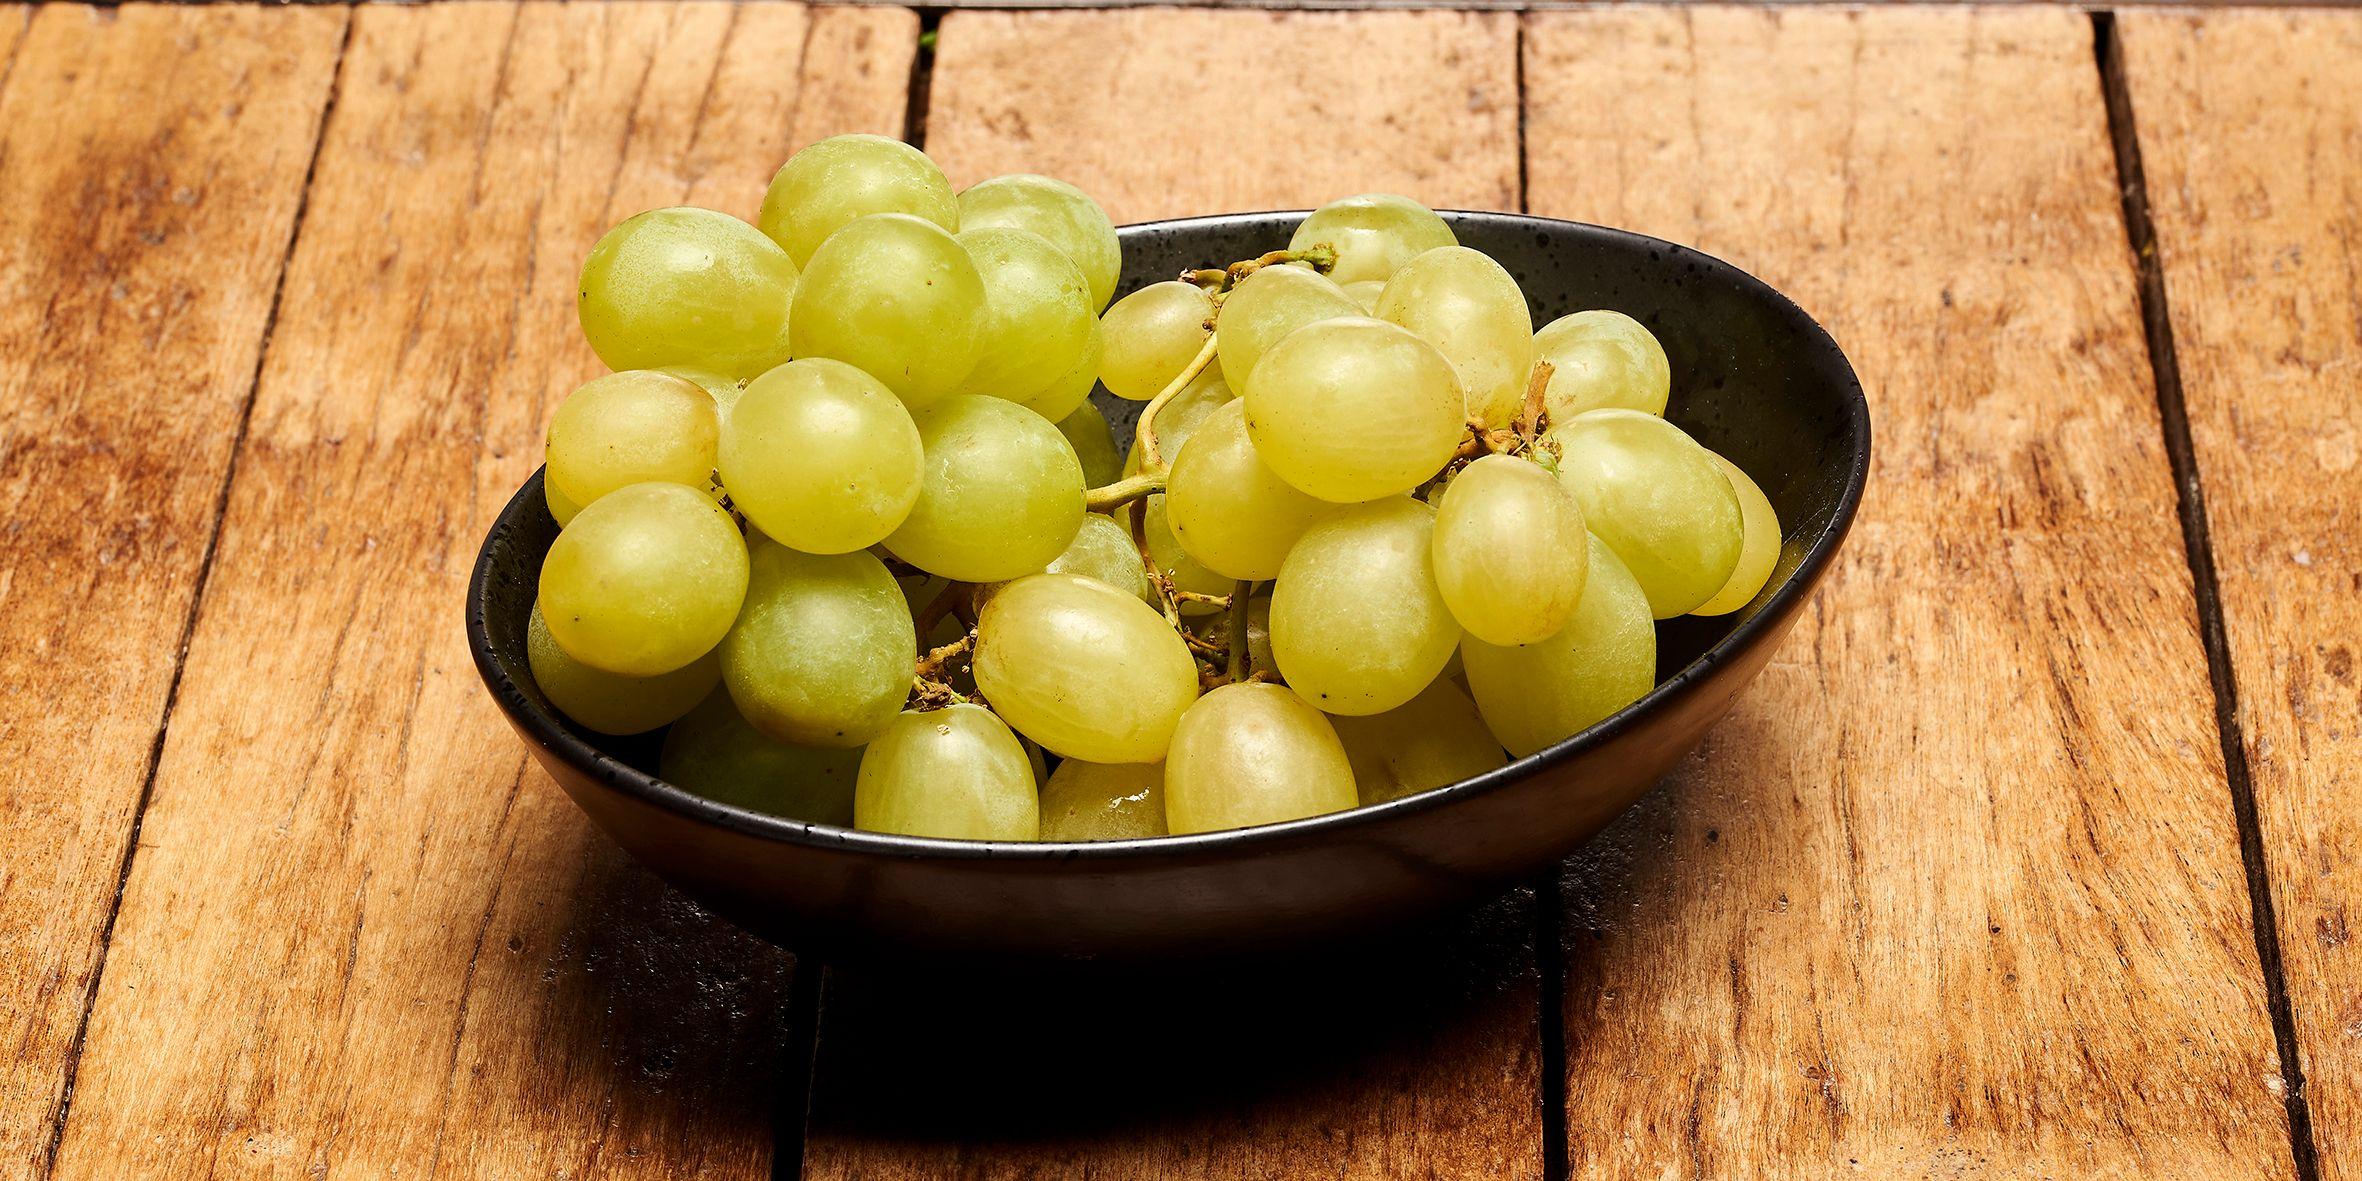 Muskaat druiven uit Italië (+/- 500gr)